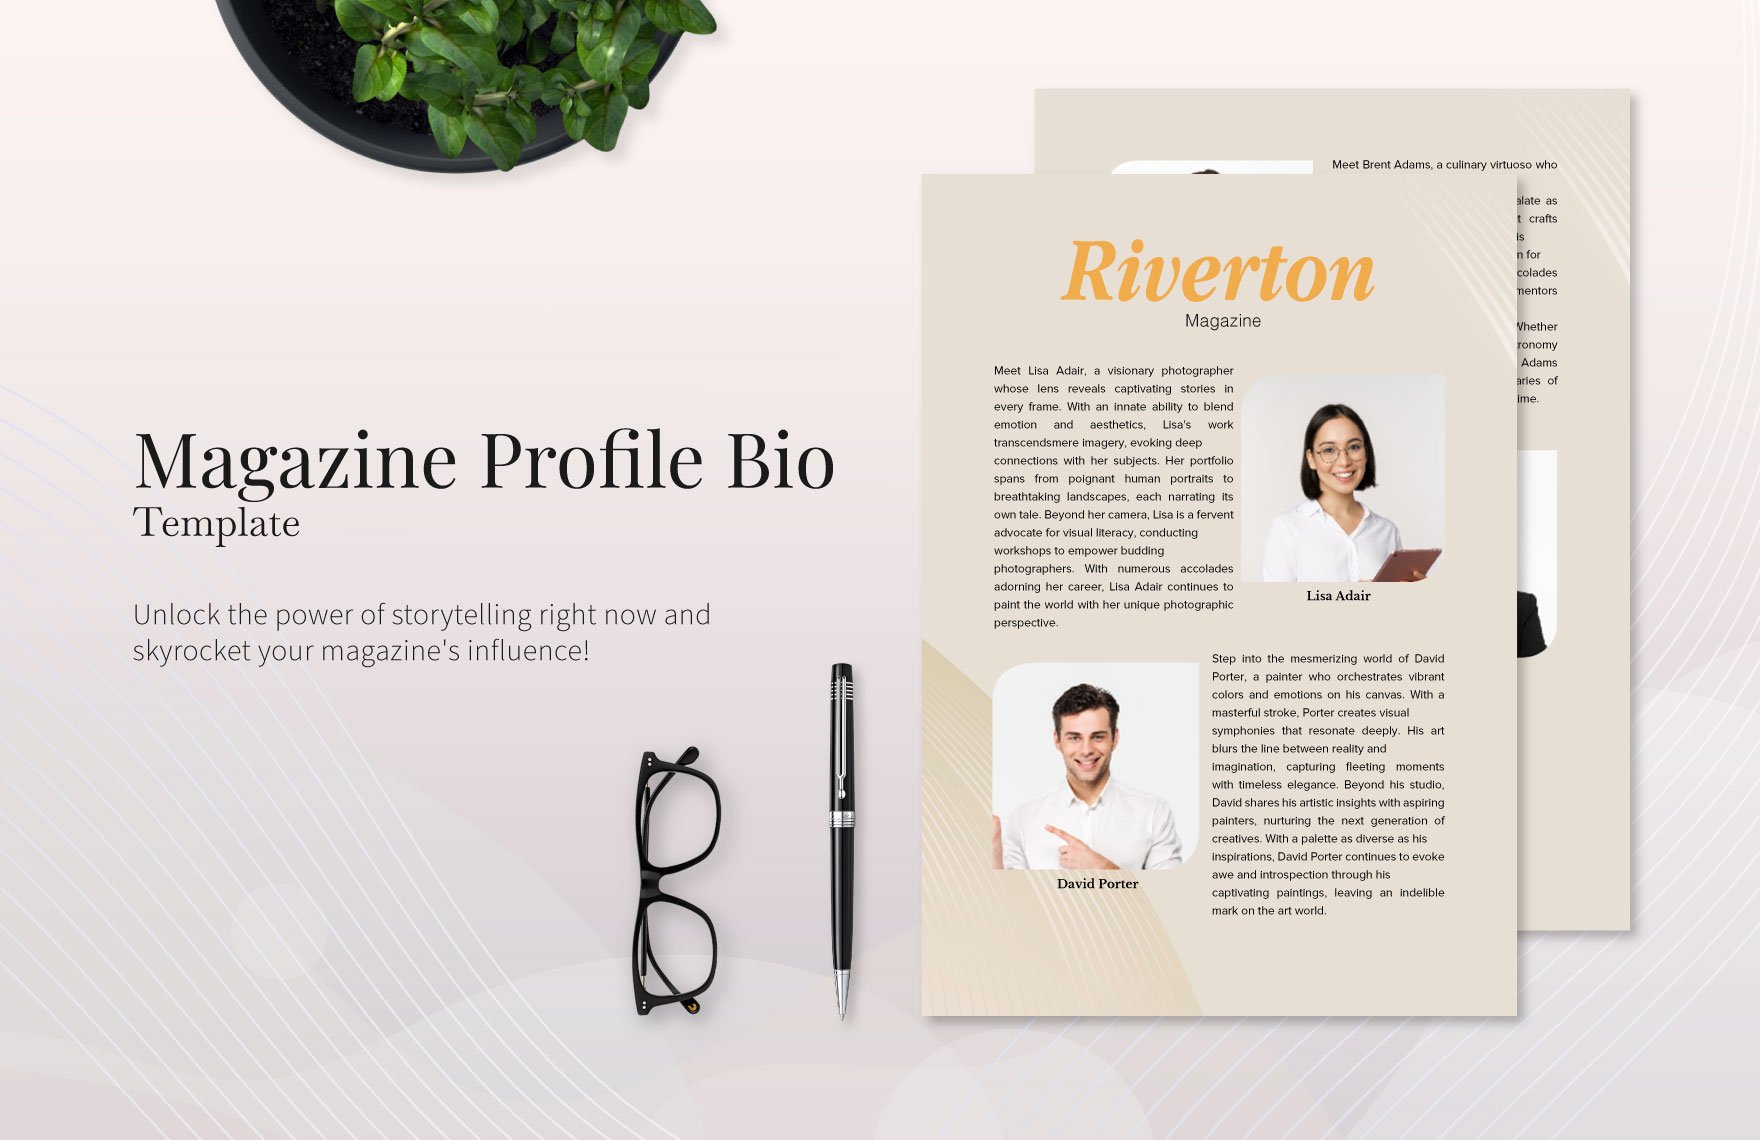 Magazine Profile Bio Template in Word, Illustrator, PSD, PNG